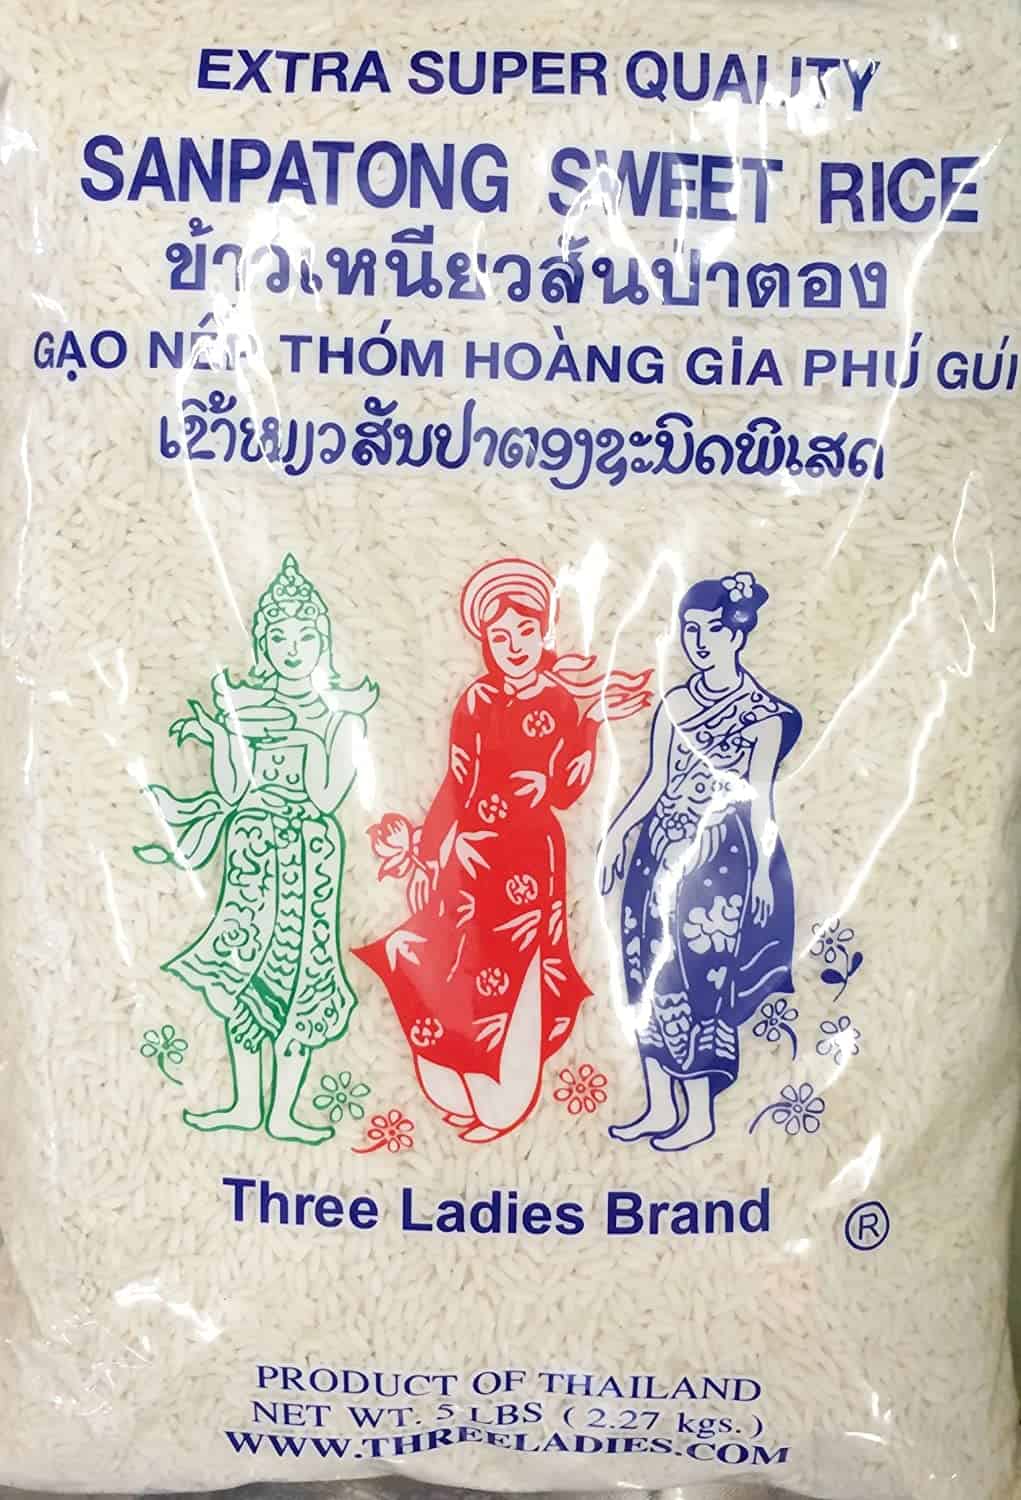 Best long grain rice: Three Ladies Brand Sanpatong Sweet Rice